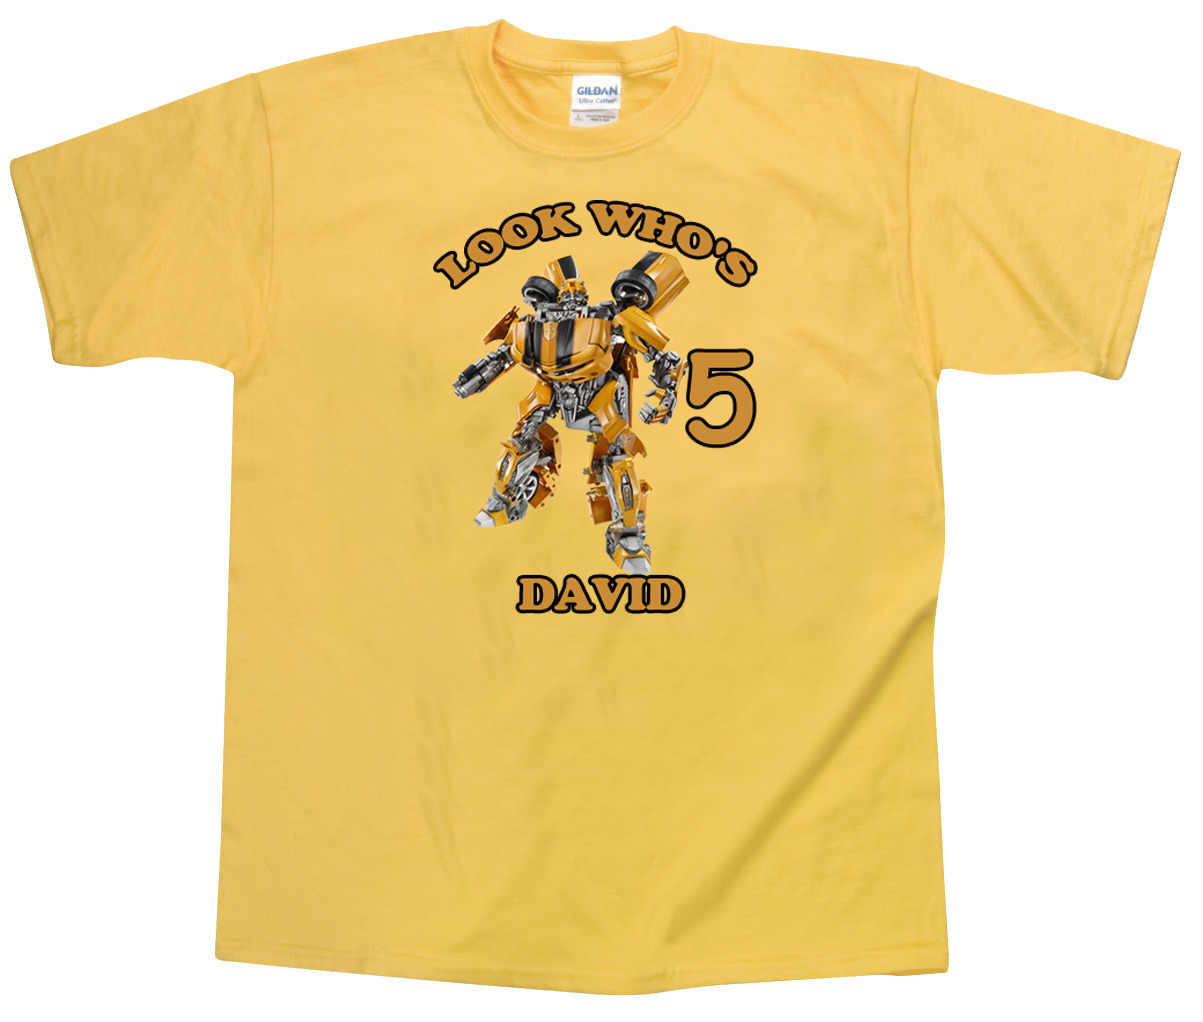 personalized transformers birthday shirt